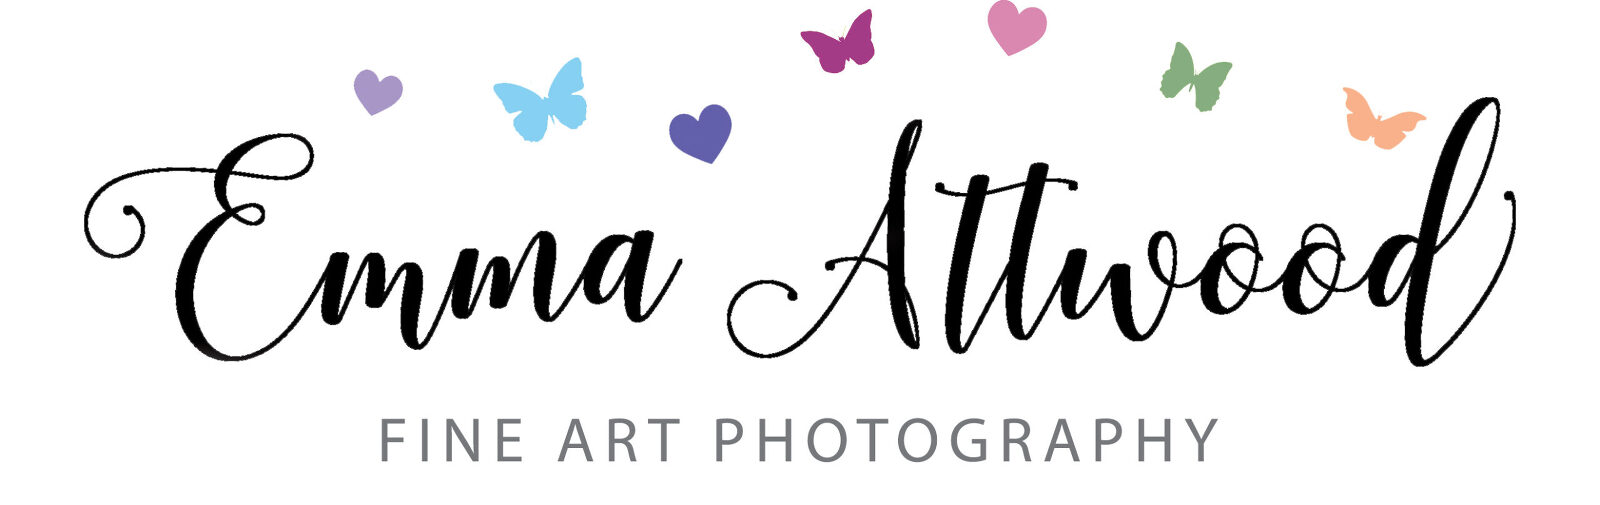 Emma Attwood Baby Photographer Worcestershire | Emma Attwood Photography | Newborn, Maternity & Birthday Photoshoots